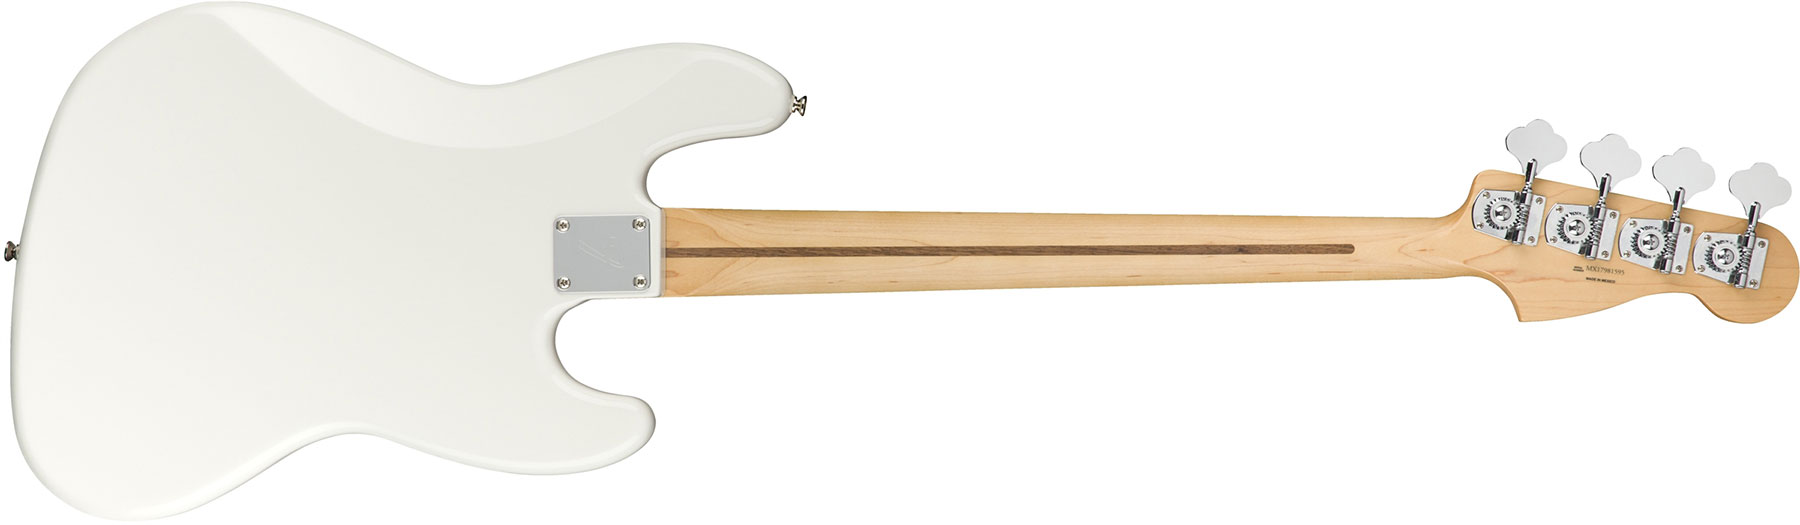 Fender Jazz Bass Player Lh Gaucher Mex Mn - Polar White - Solid body electric bass - Variation 1